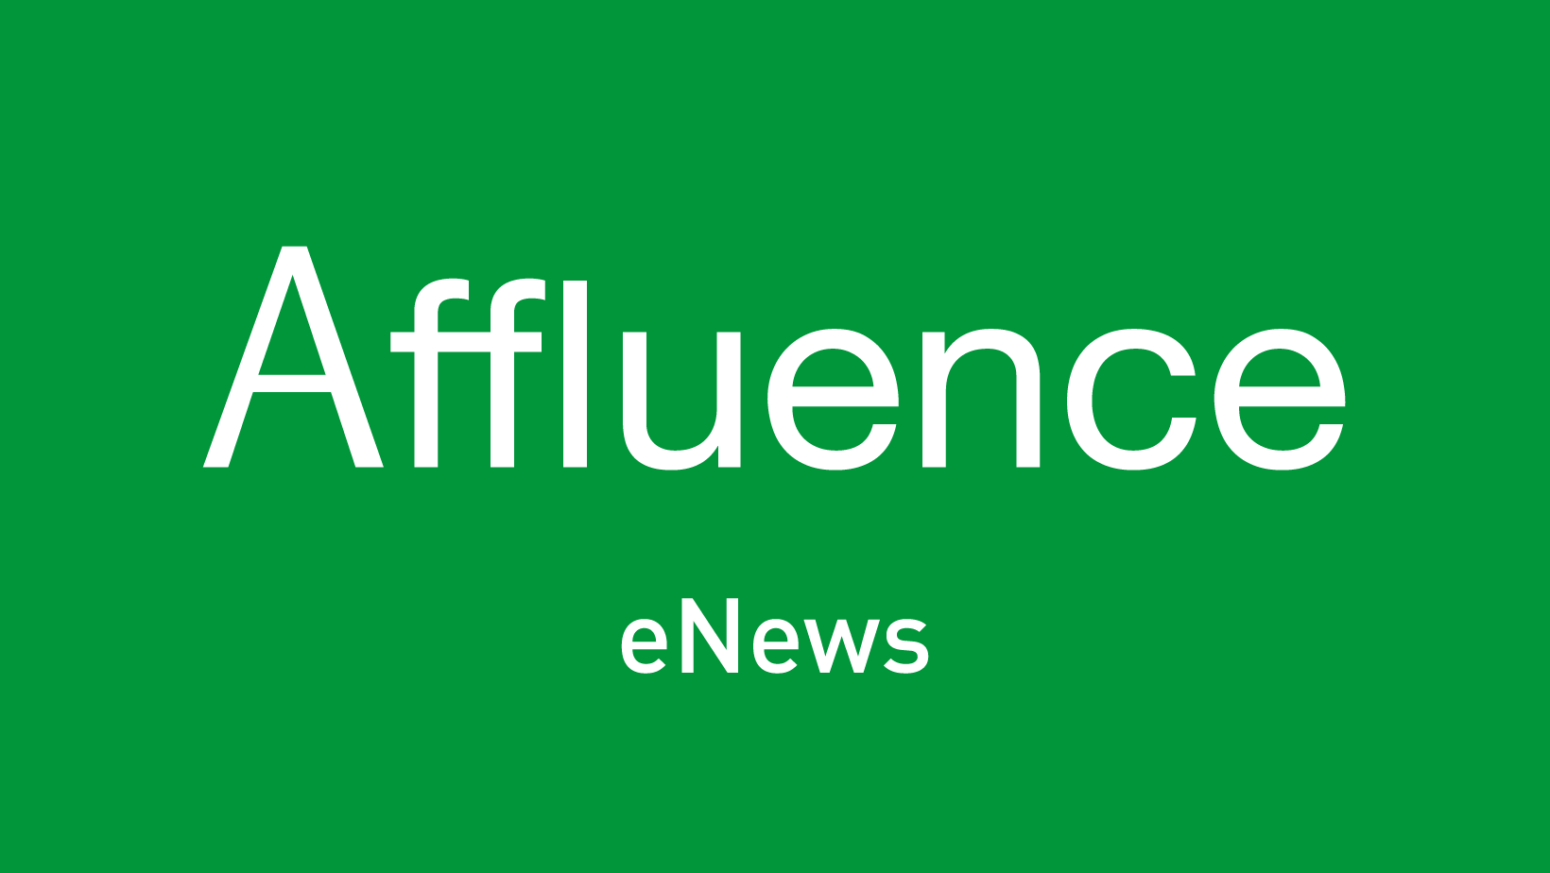 Affluence eNews article